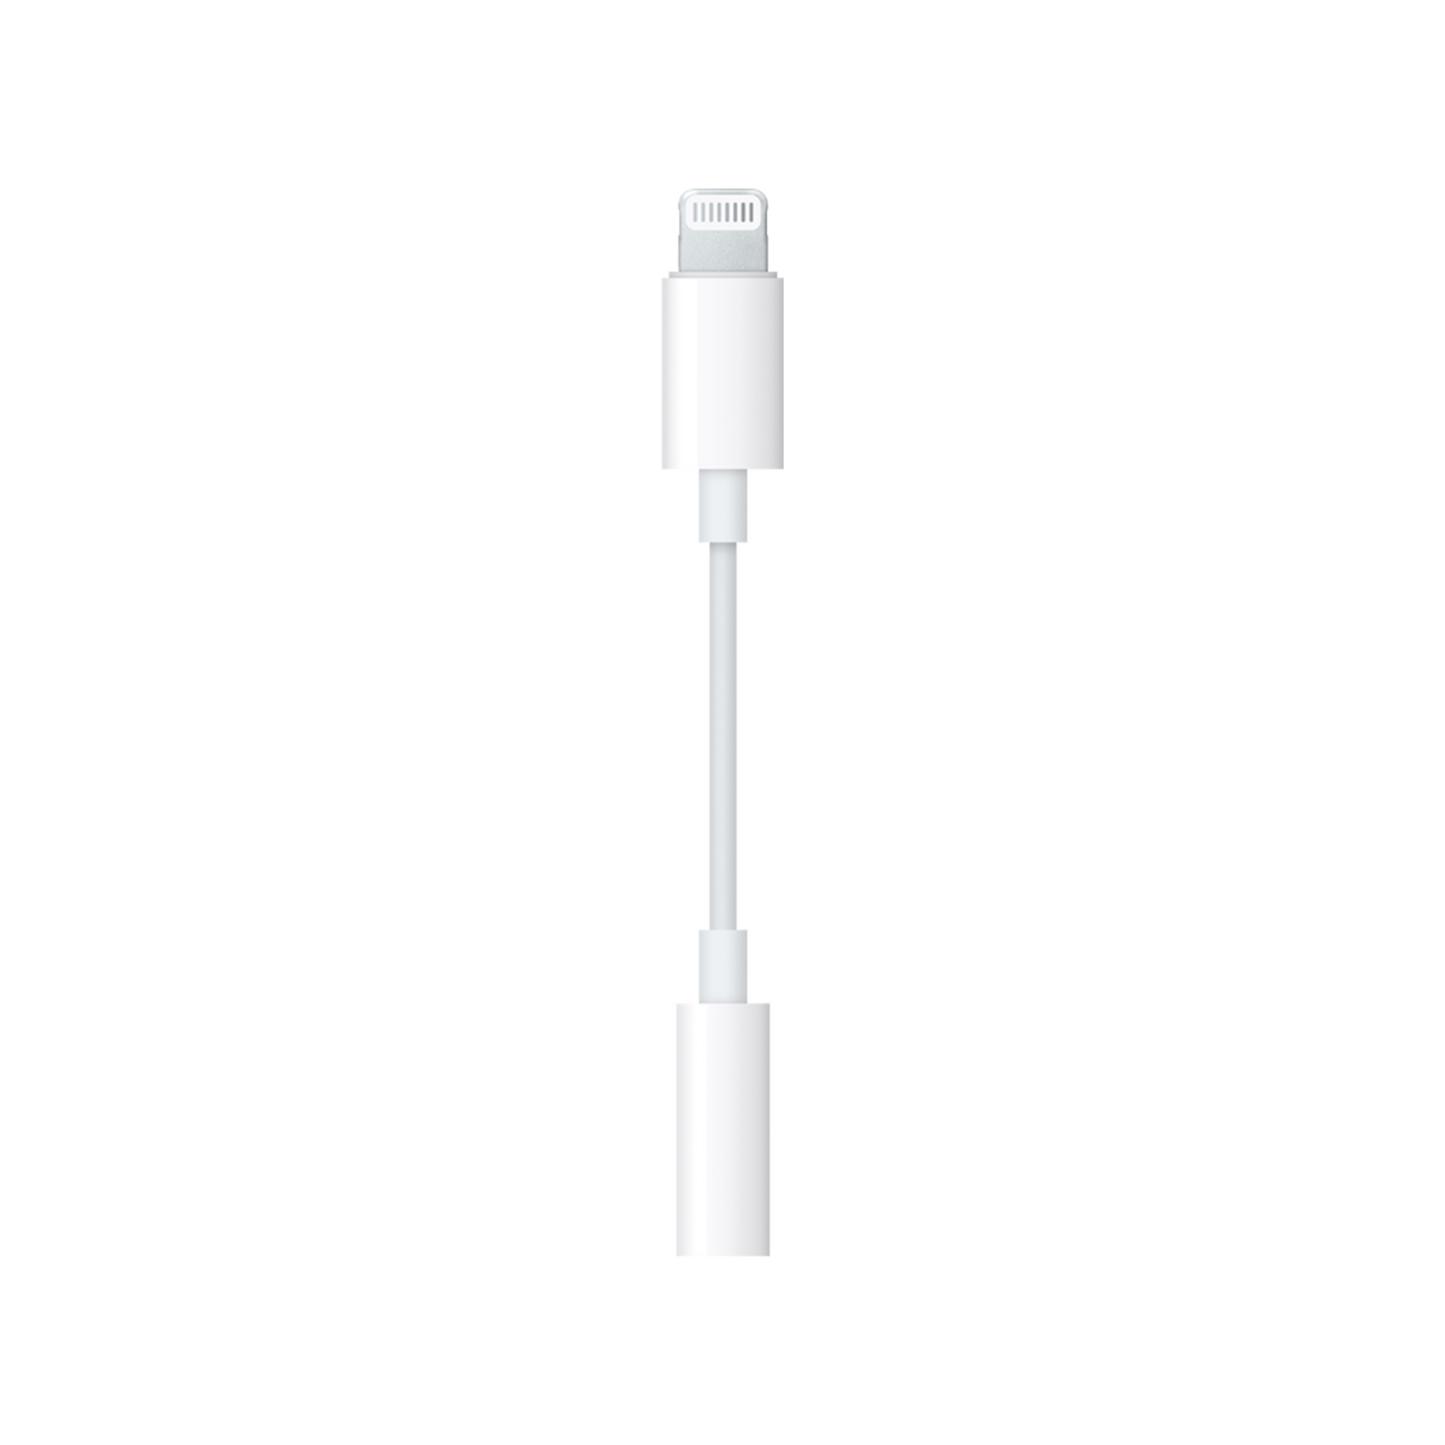 Tremble London Dømme Apple Lightning to 3.5 mm Headphone Jack Adapter – Small Dog Electronics